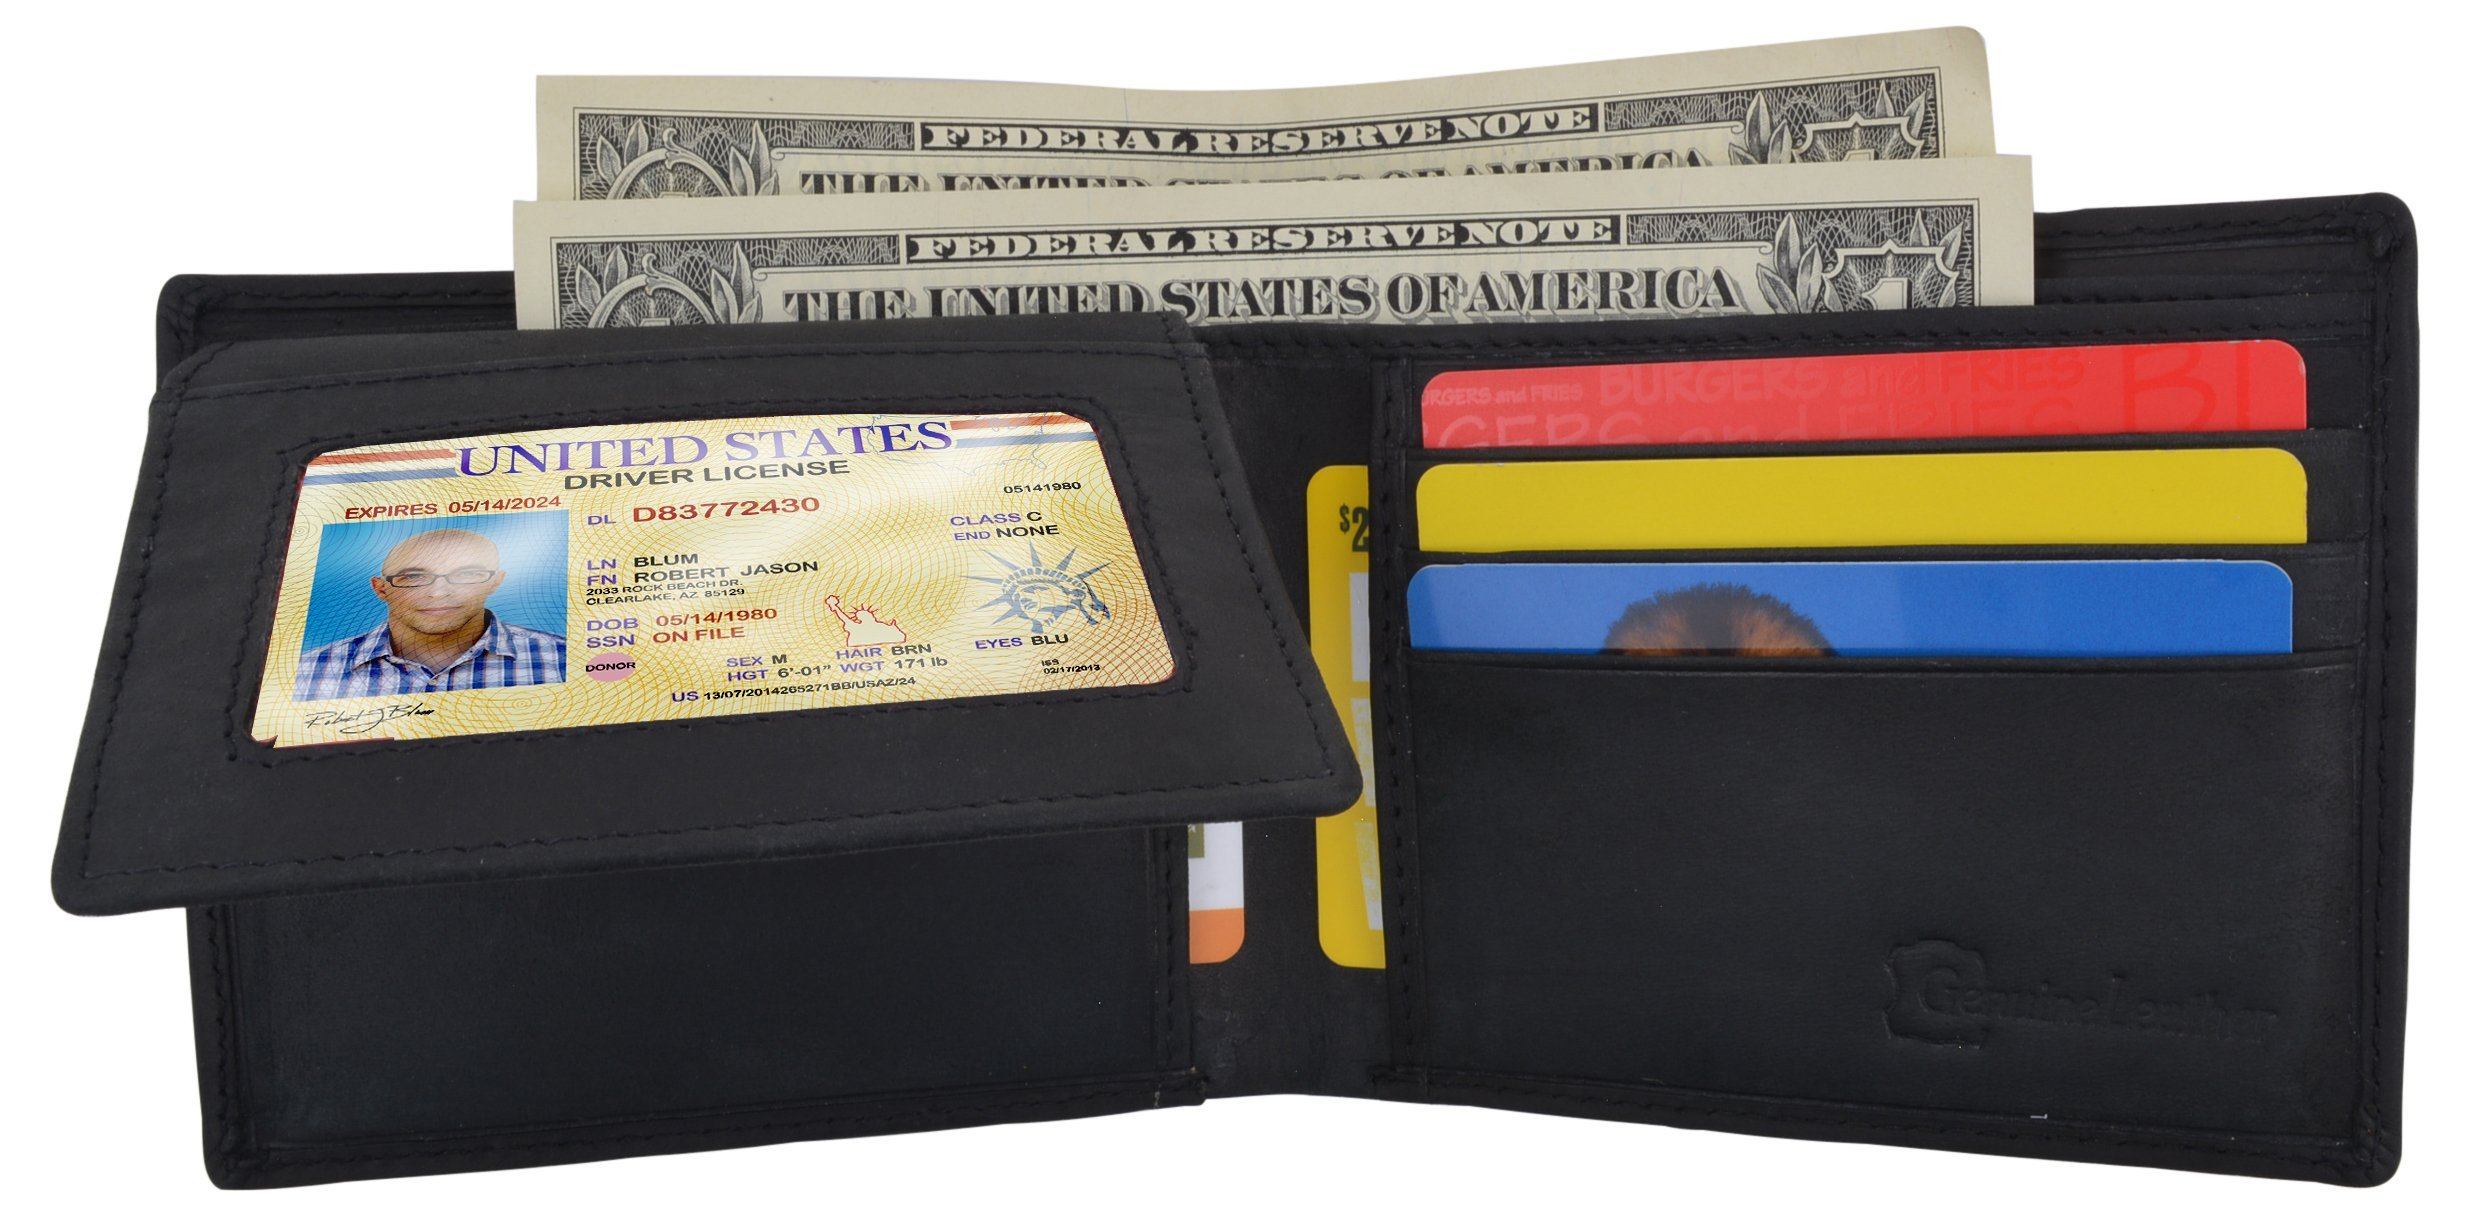  RFID Rustic Men Wallet-Los Angeles Design Craft Stamp